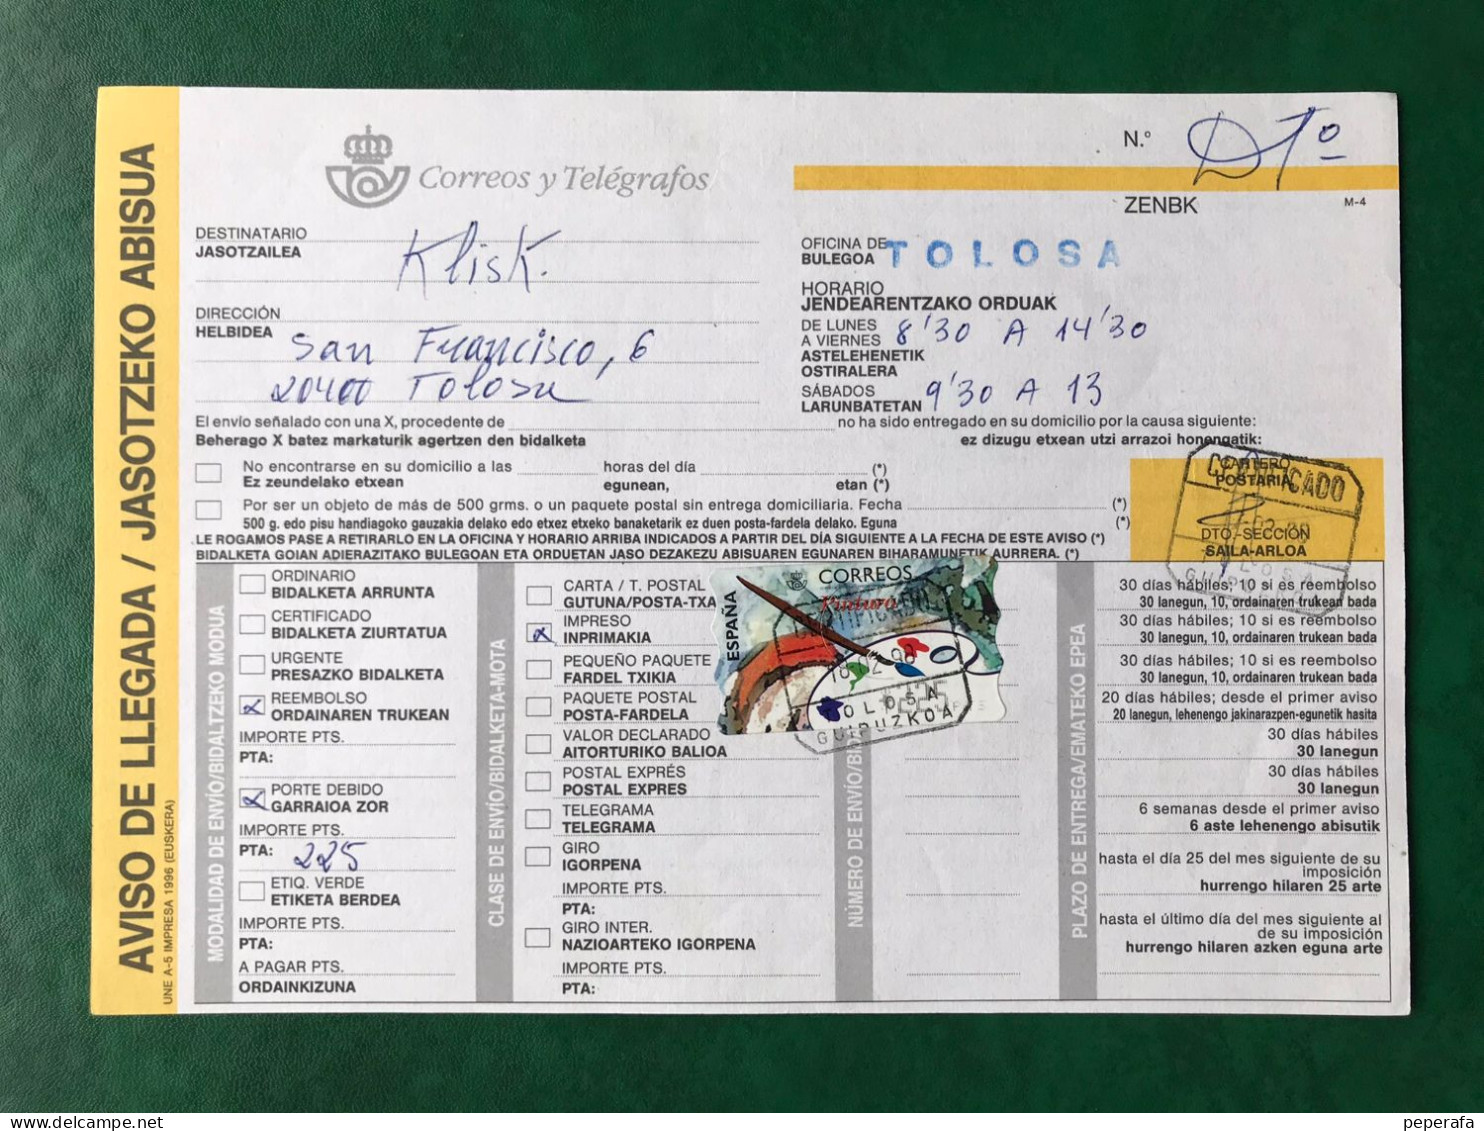 España Spain 1997, ATM PINTURA, DOCUMENTO POSTAL AVIS DE LLEGADA 225 PTS, EPELSA, RARO!!! - Machine Labels [ATM]